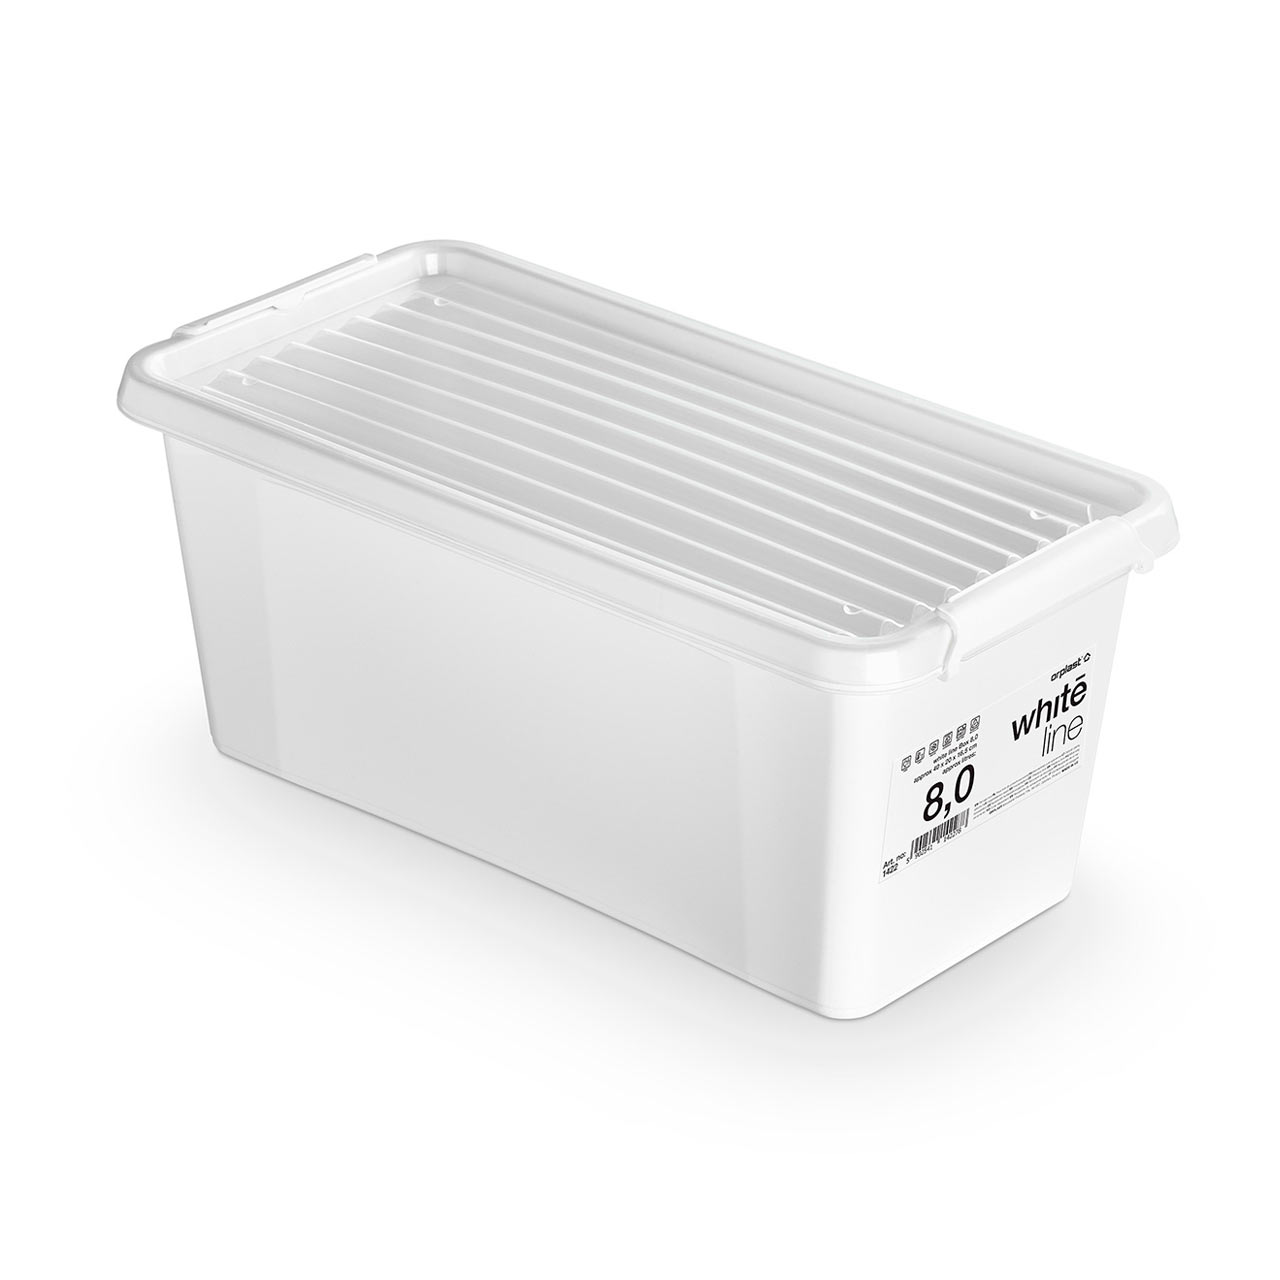 Storage container white.line 1422 White